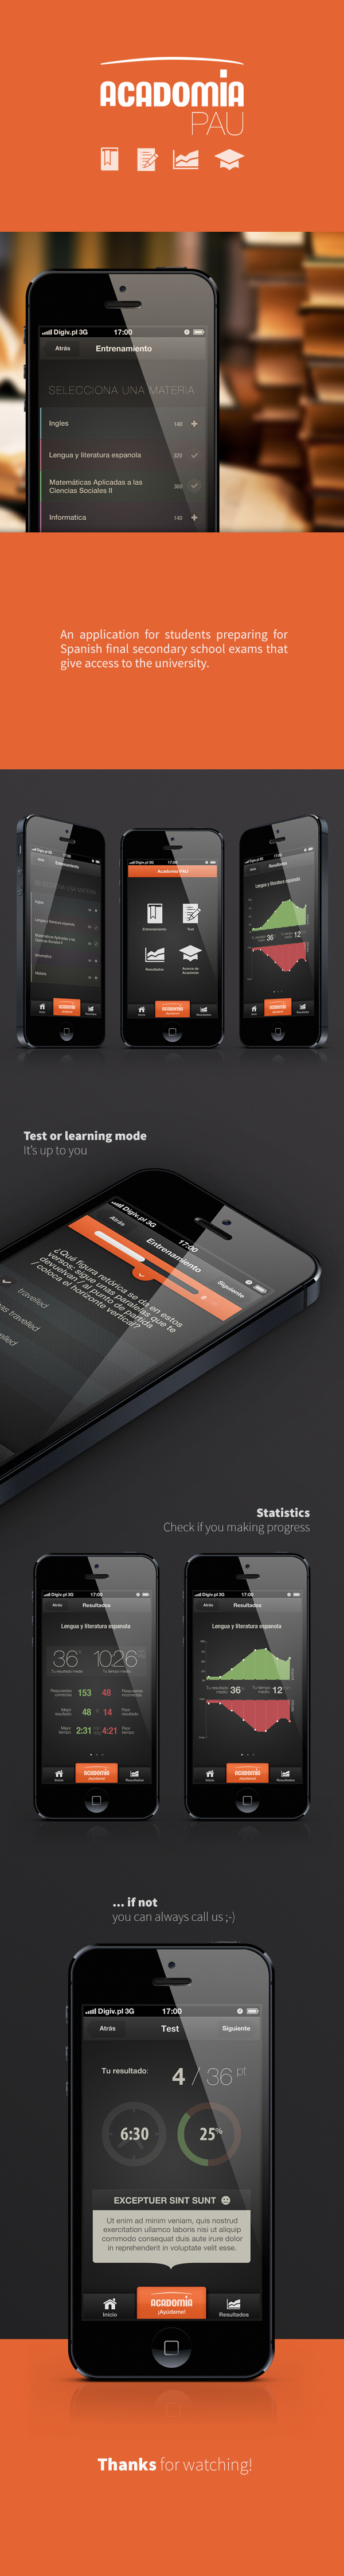 app ios iphone Education test